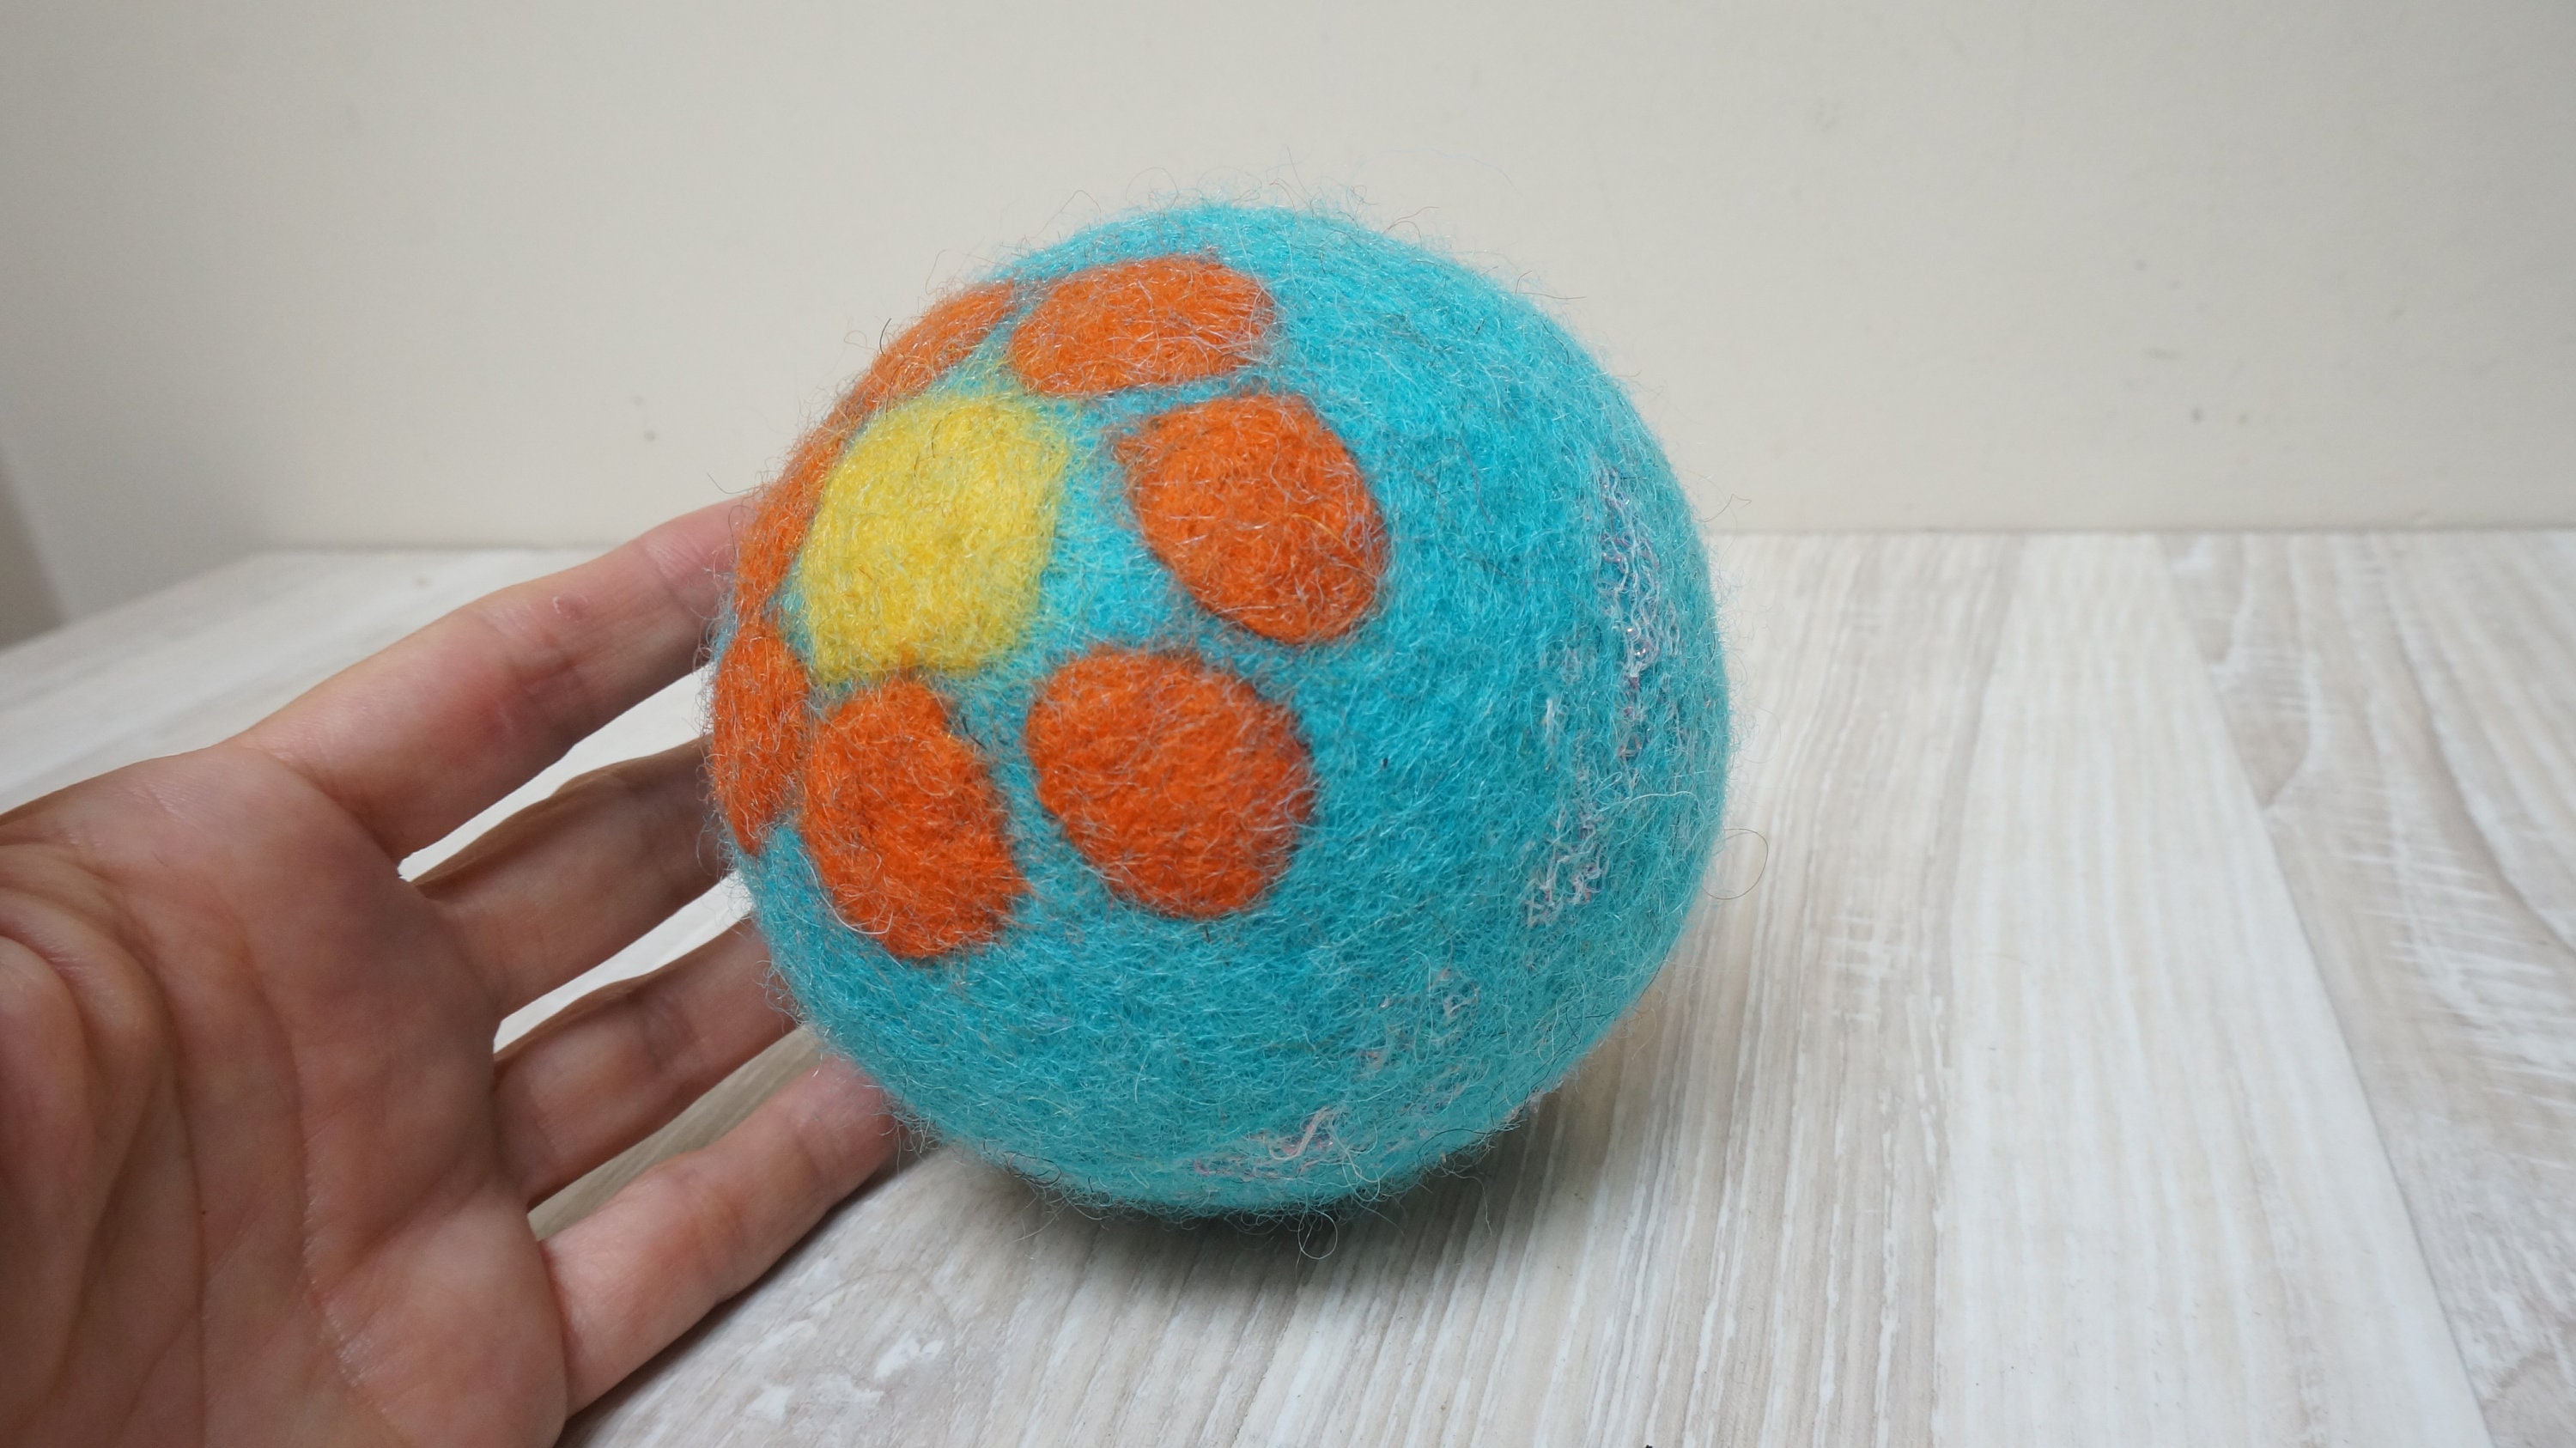 ROSERAY] 100% Wool Dryer Balls - Original